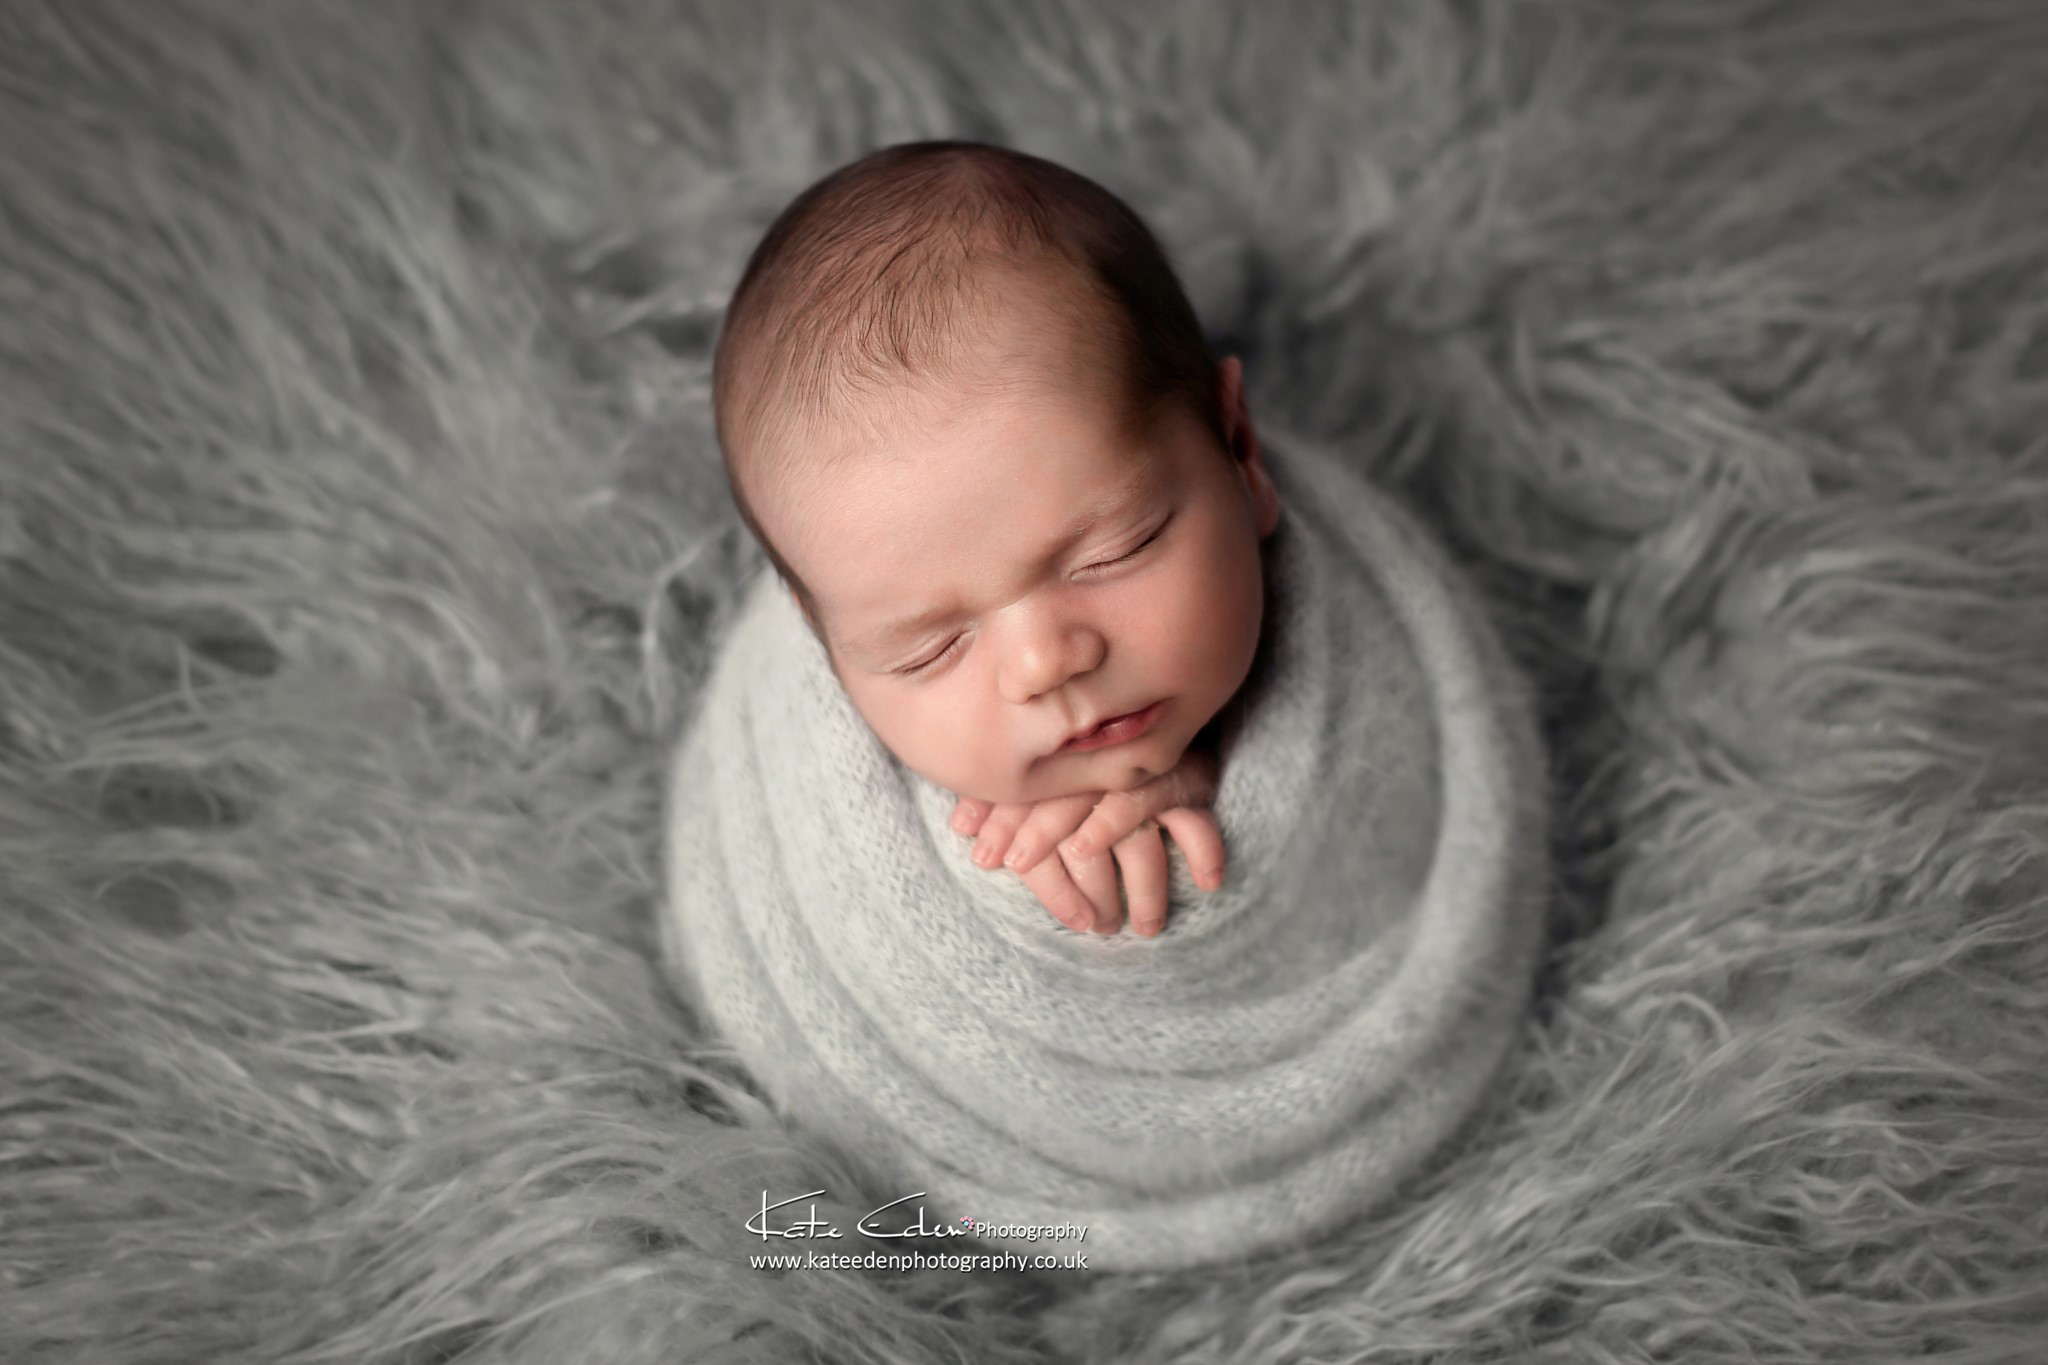 Baby photoshoot in Milton Keynes | Kate Eden Photography